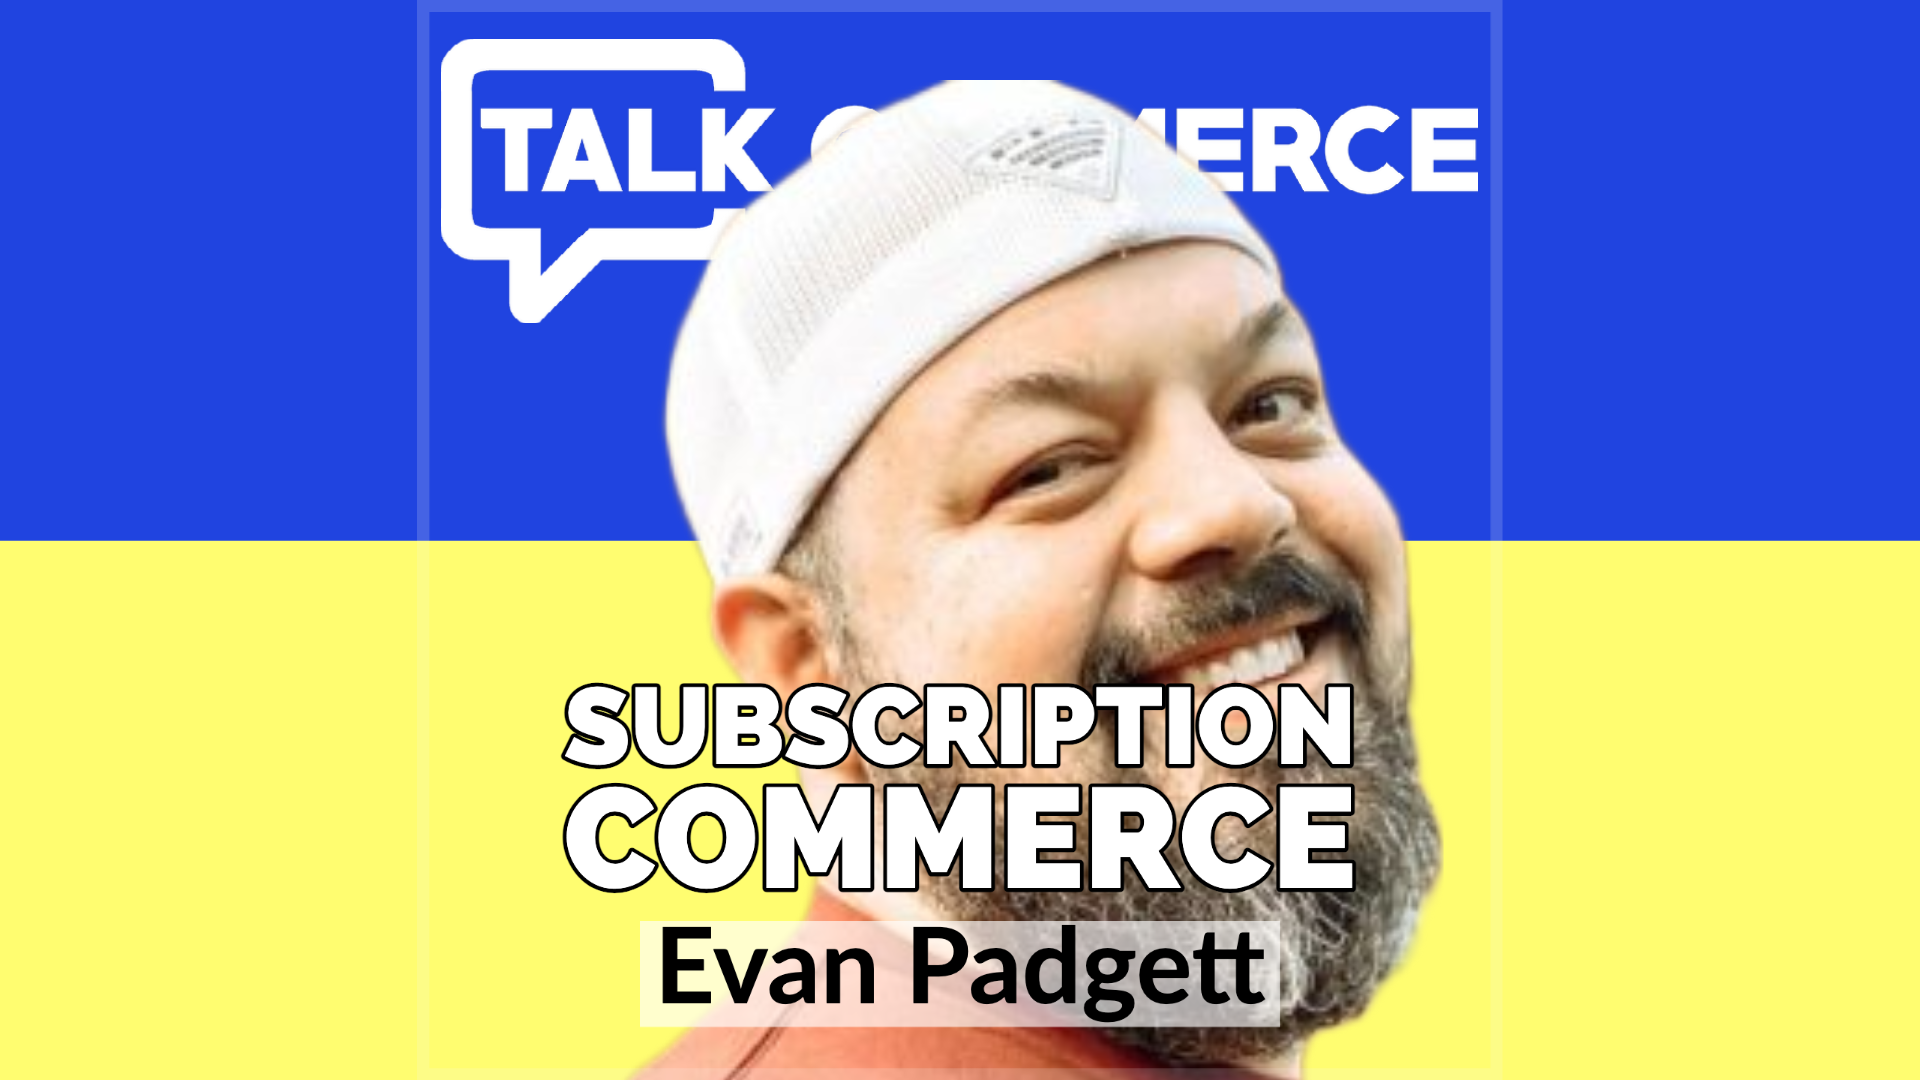 Talk-Commerce Evan Padgett